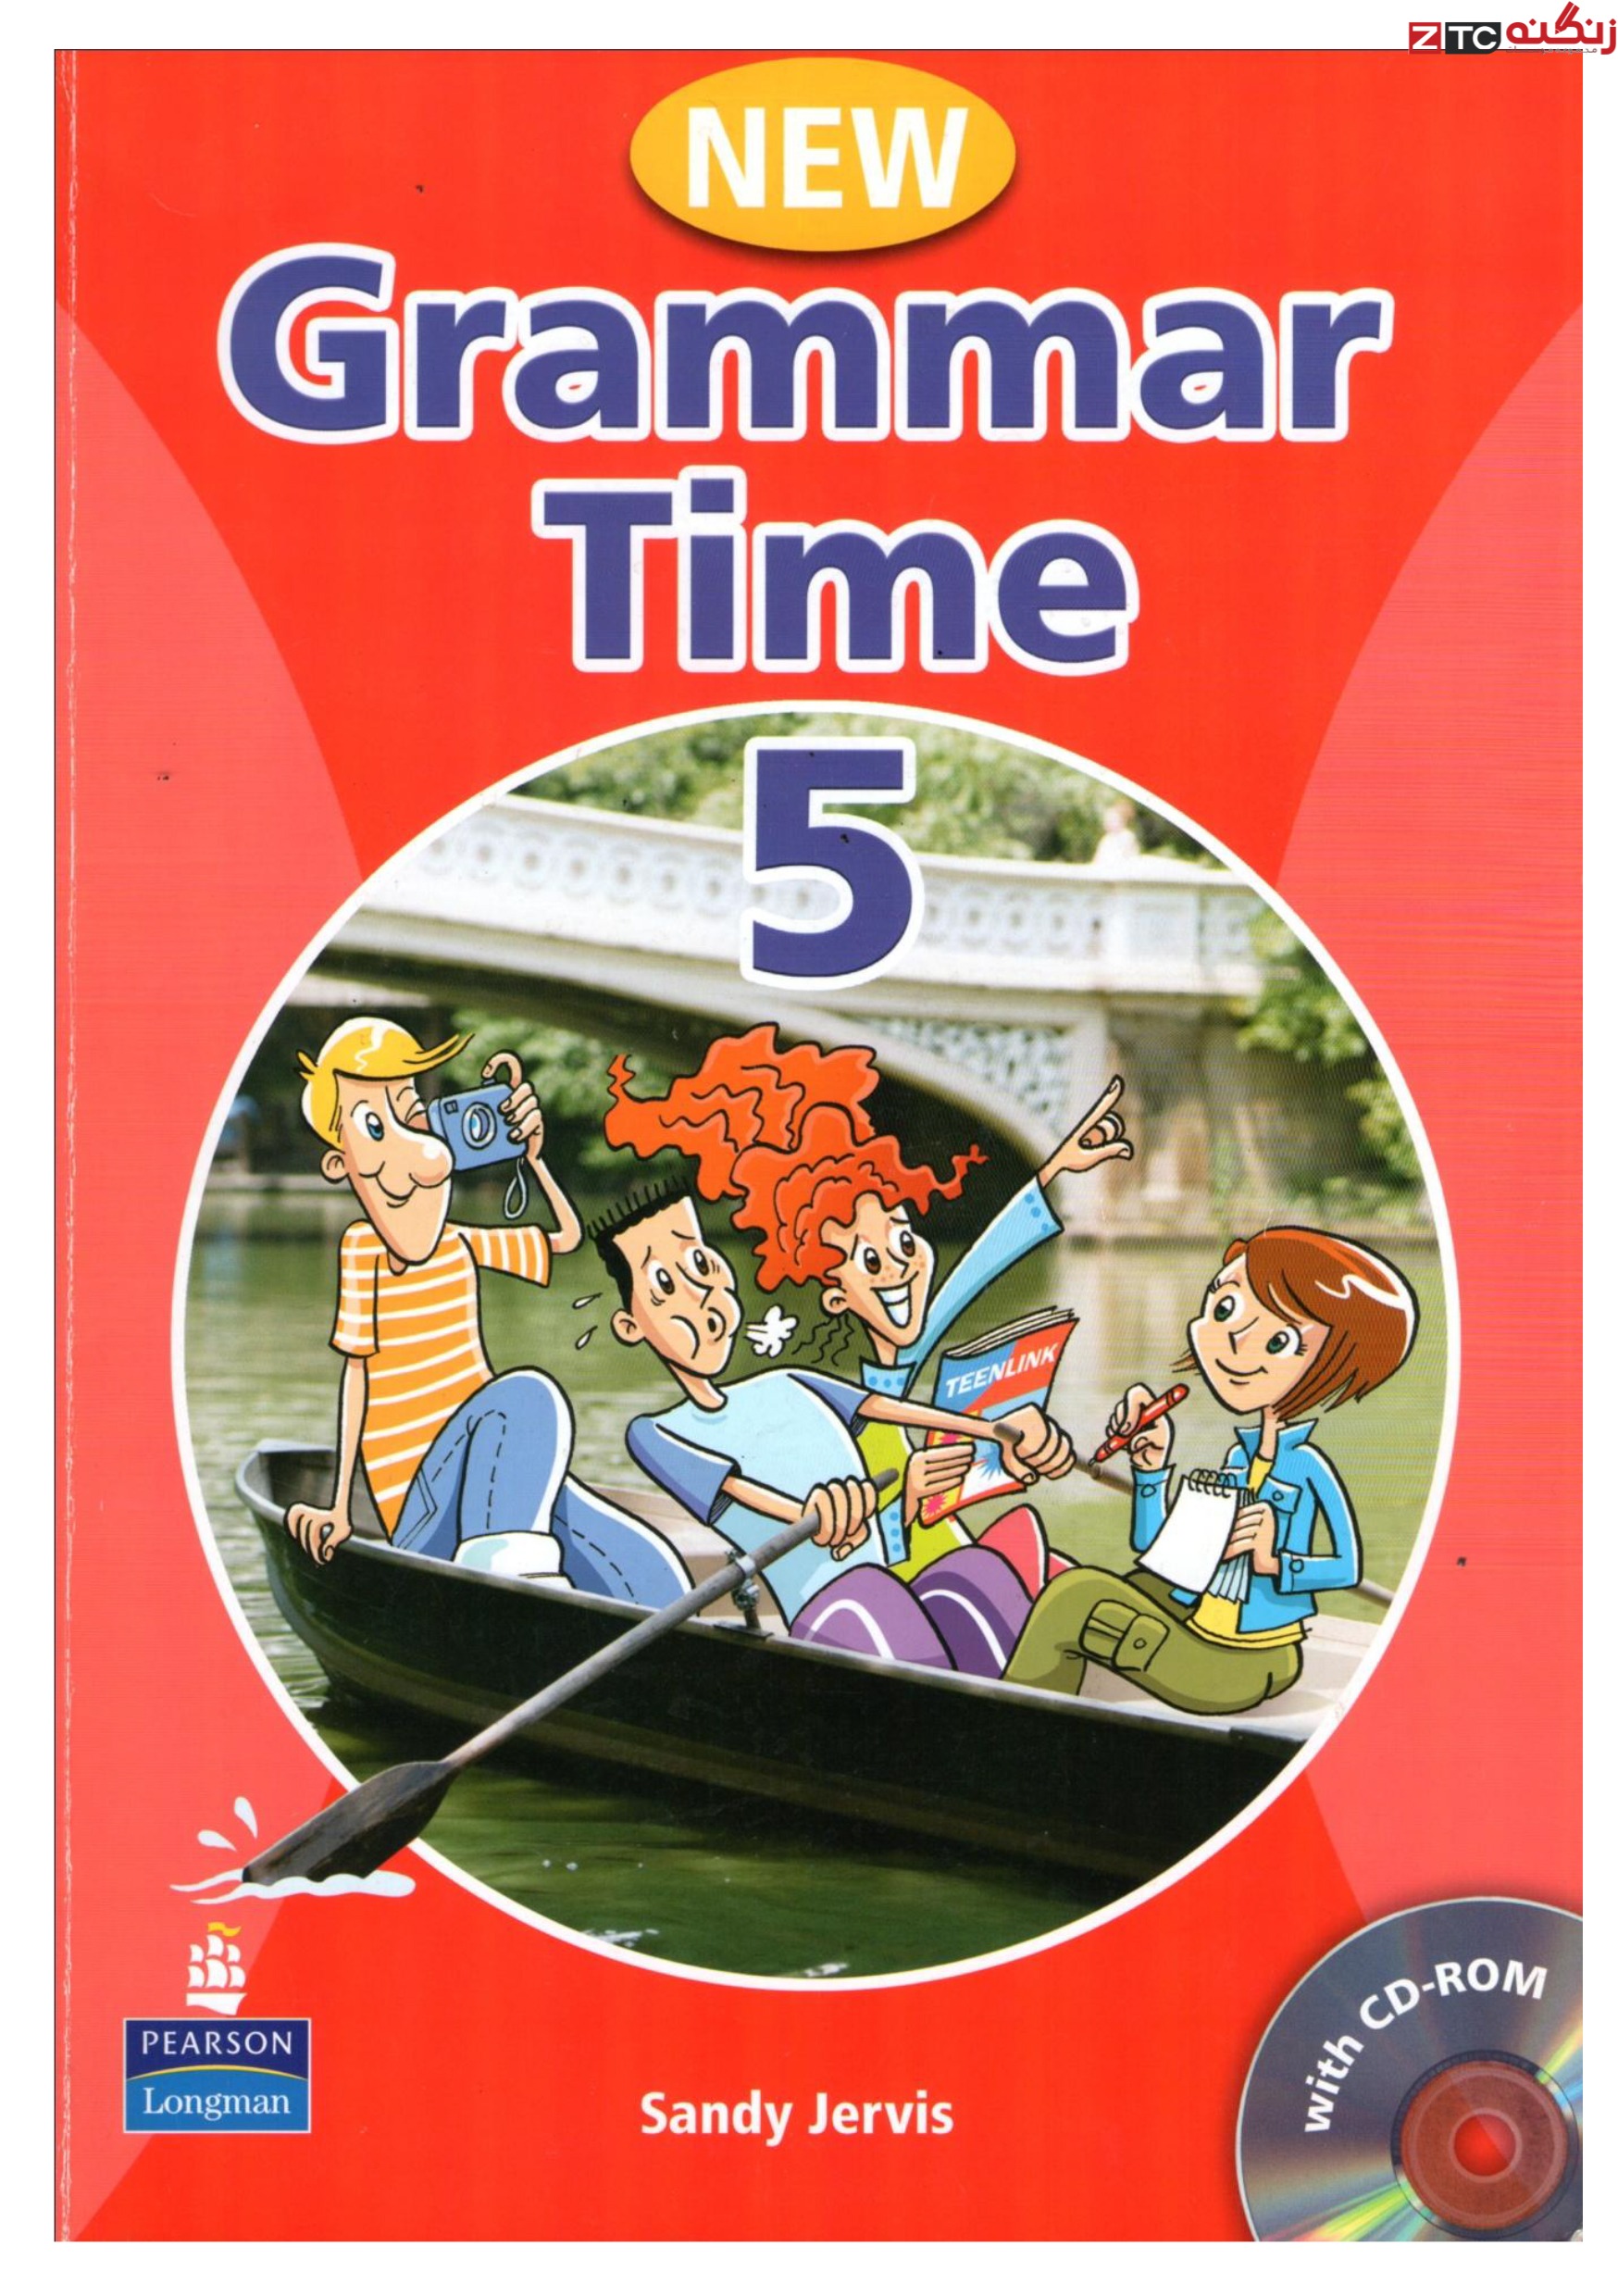 Longman New Grammar Time 5